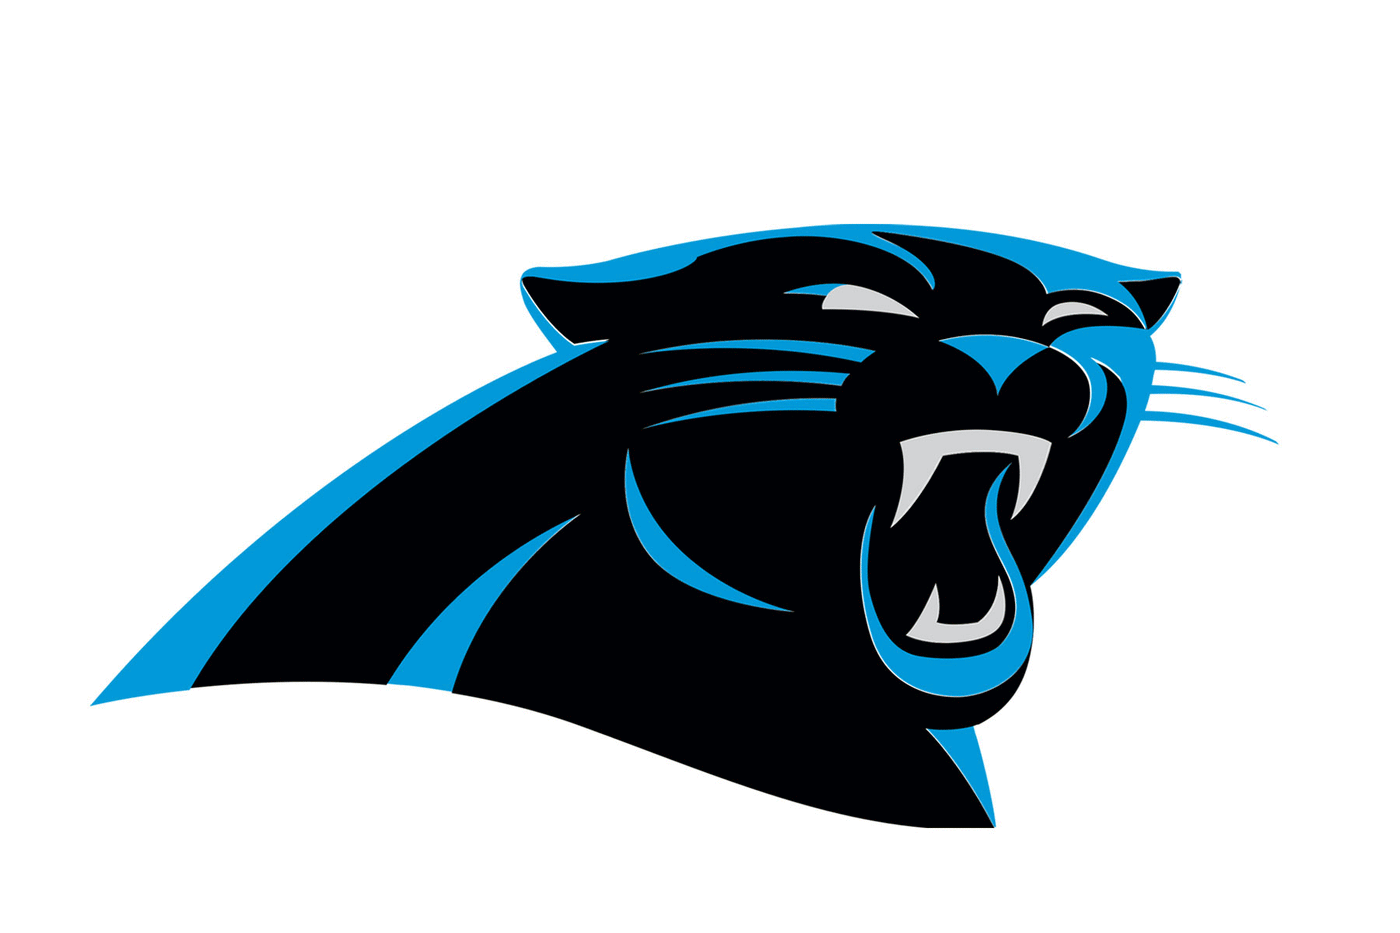 Carolina Panthers Football Helmets